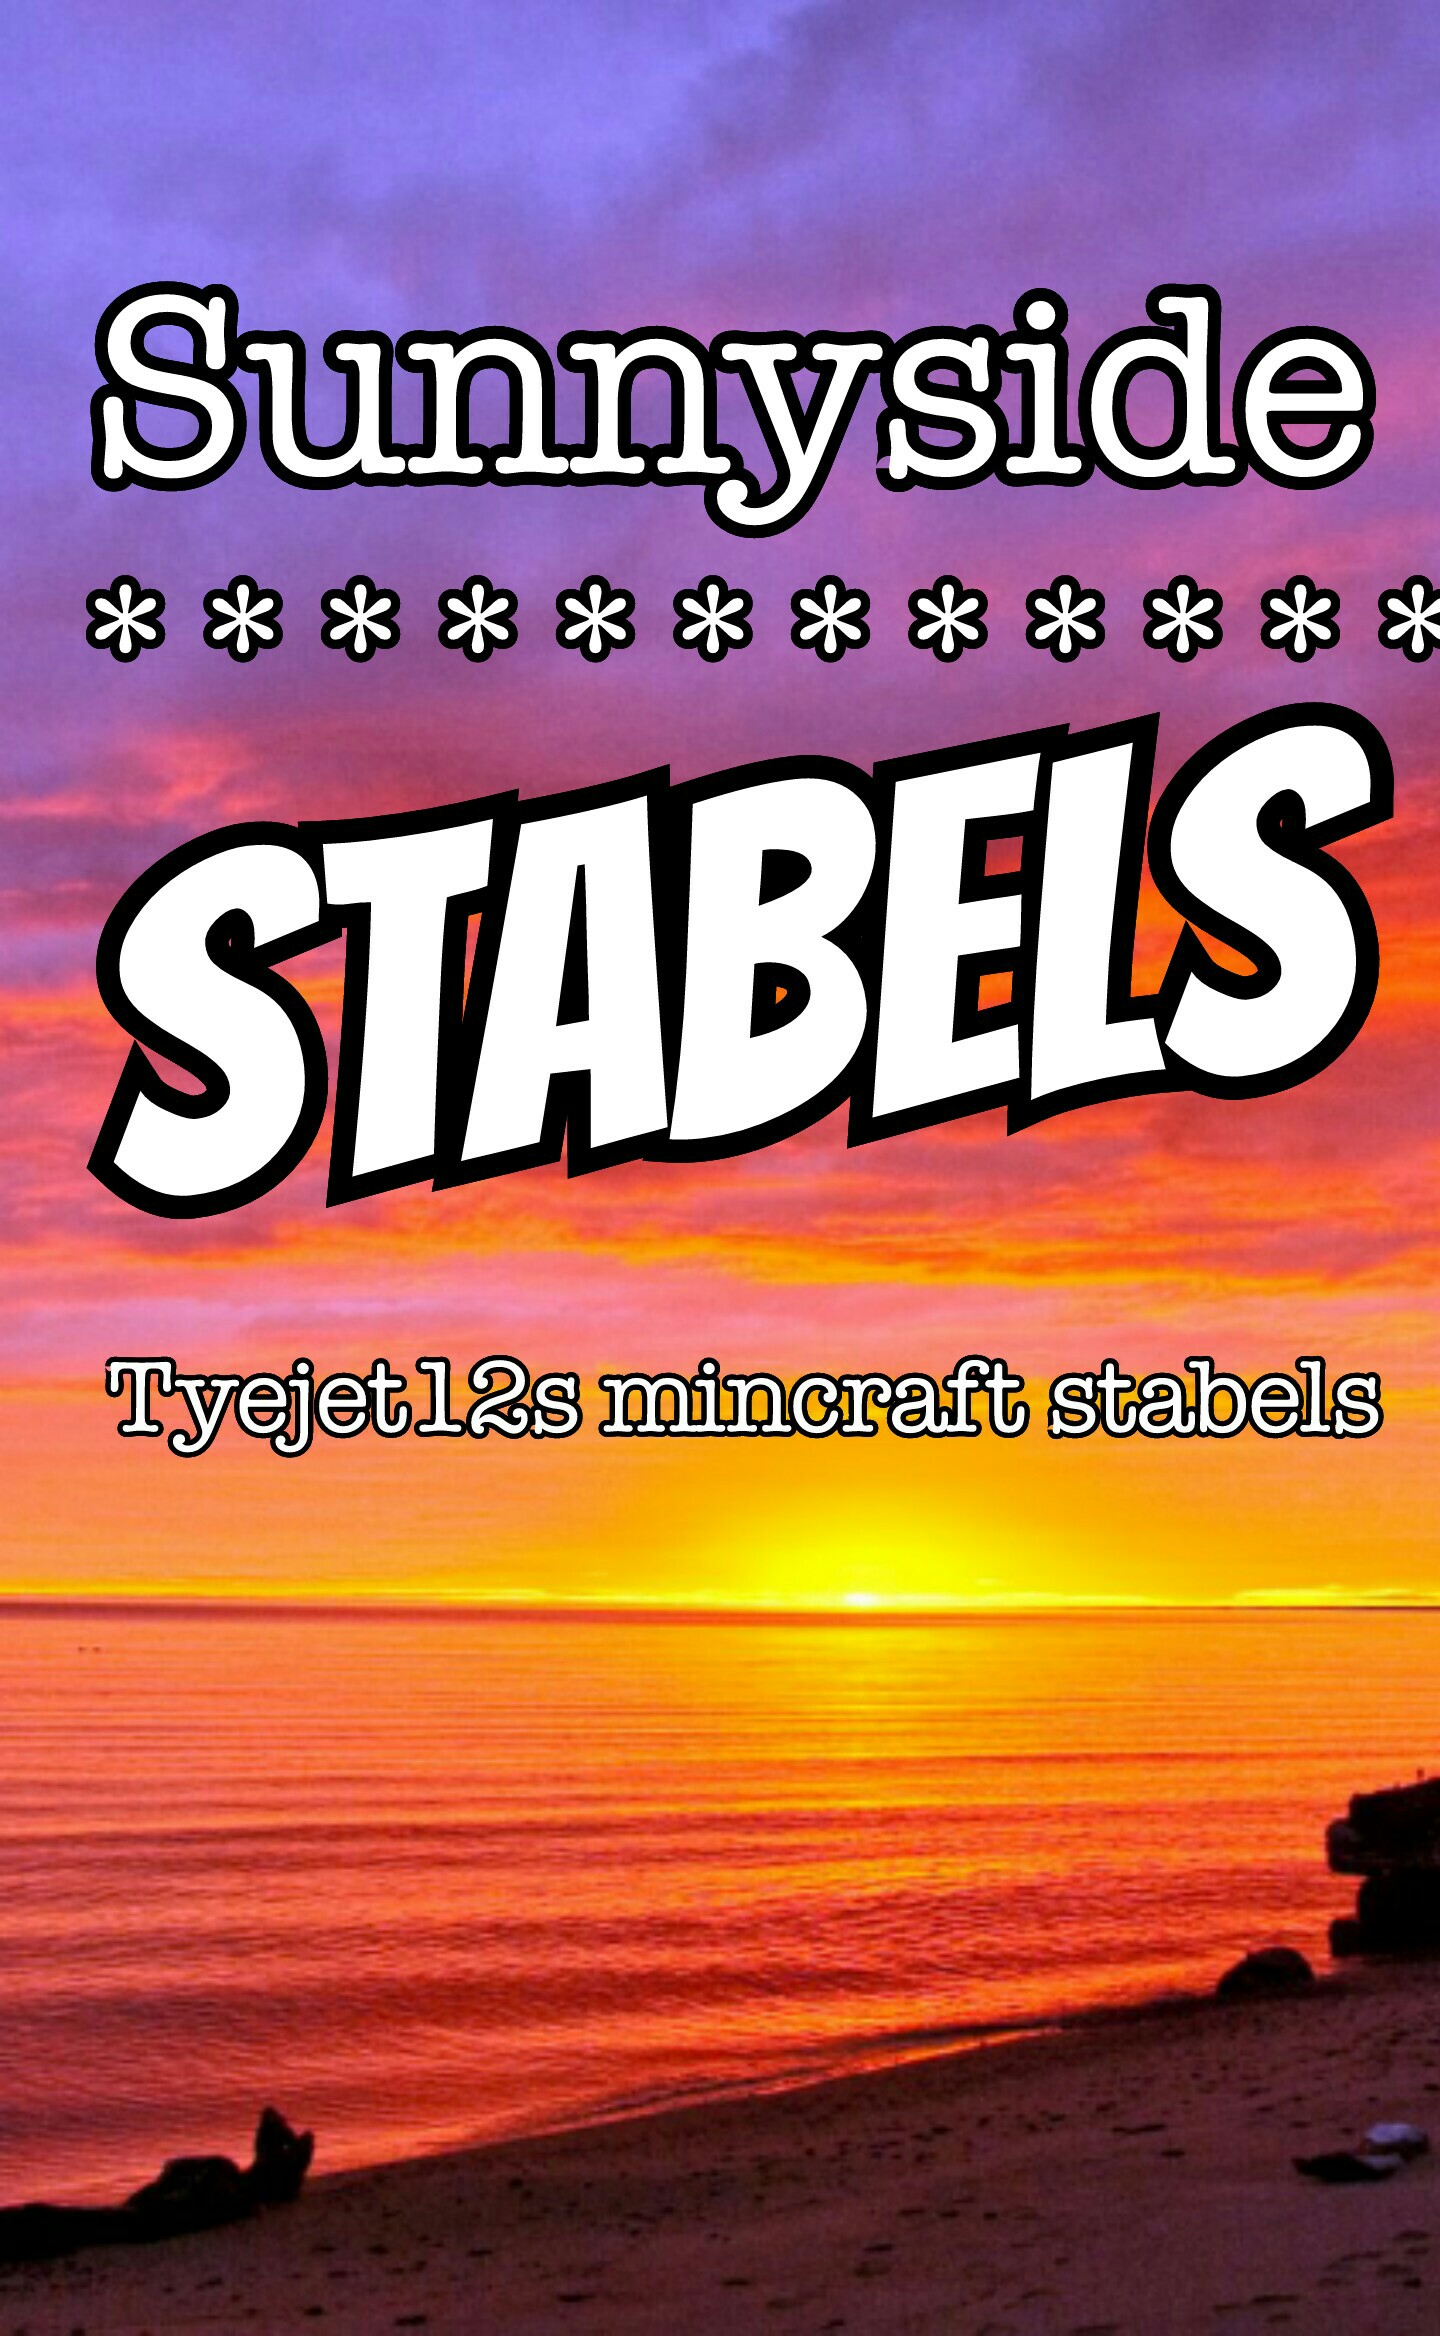 Tyejet12s mincraft stabels